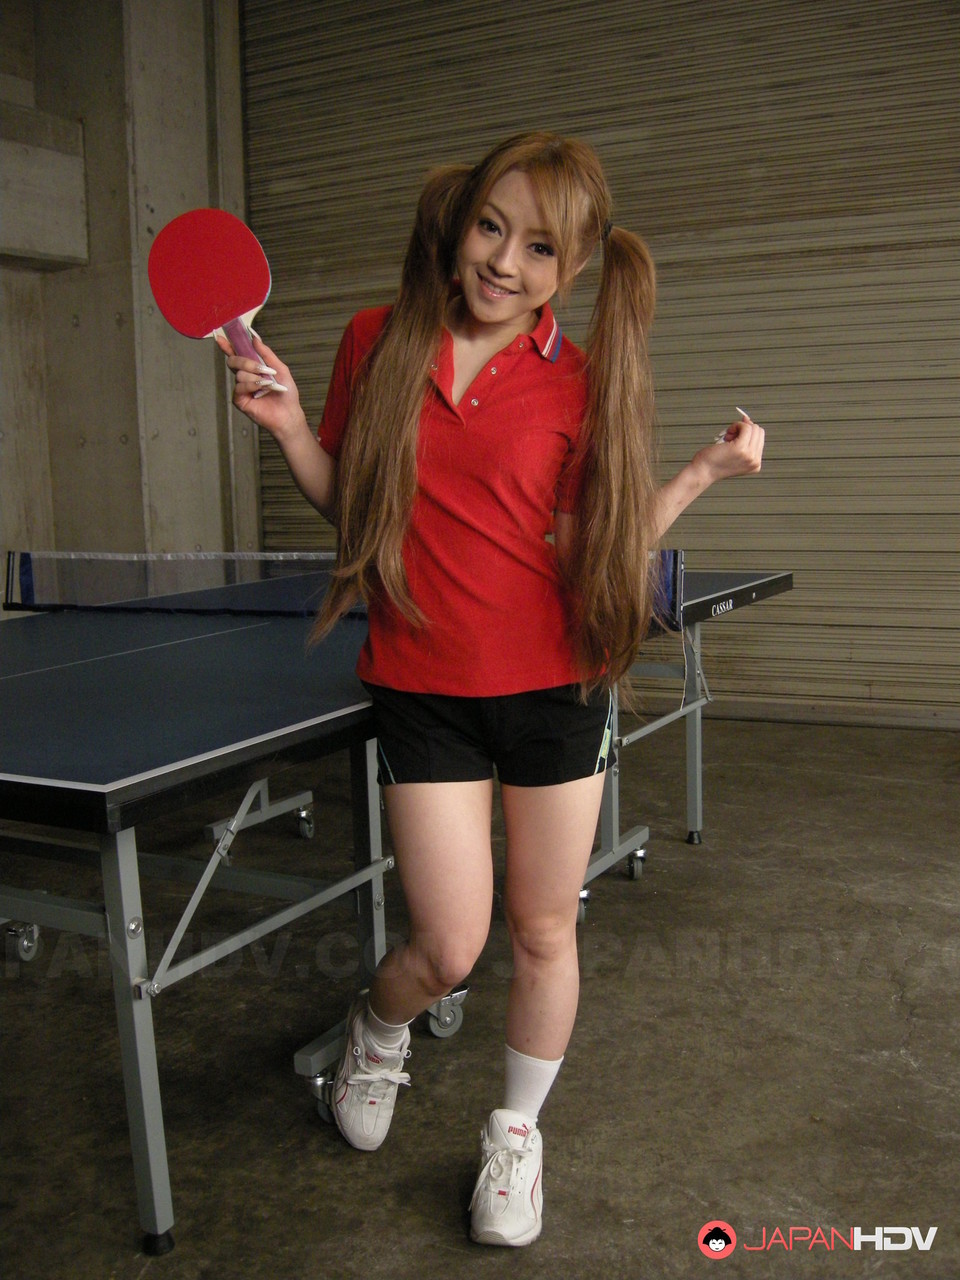 Japanese table tennis player Ria Sakurai gets face fucked by her coach photo porno #426550941 | Japan HDV Pics, Ria Sakurai, Japanese, porno mobile